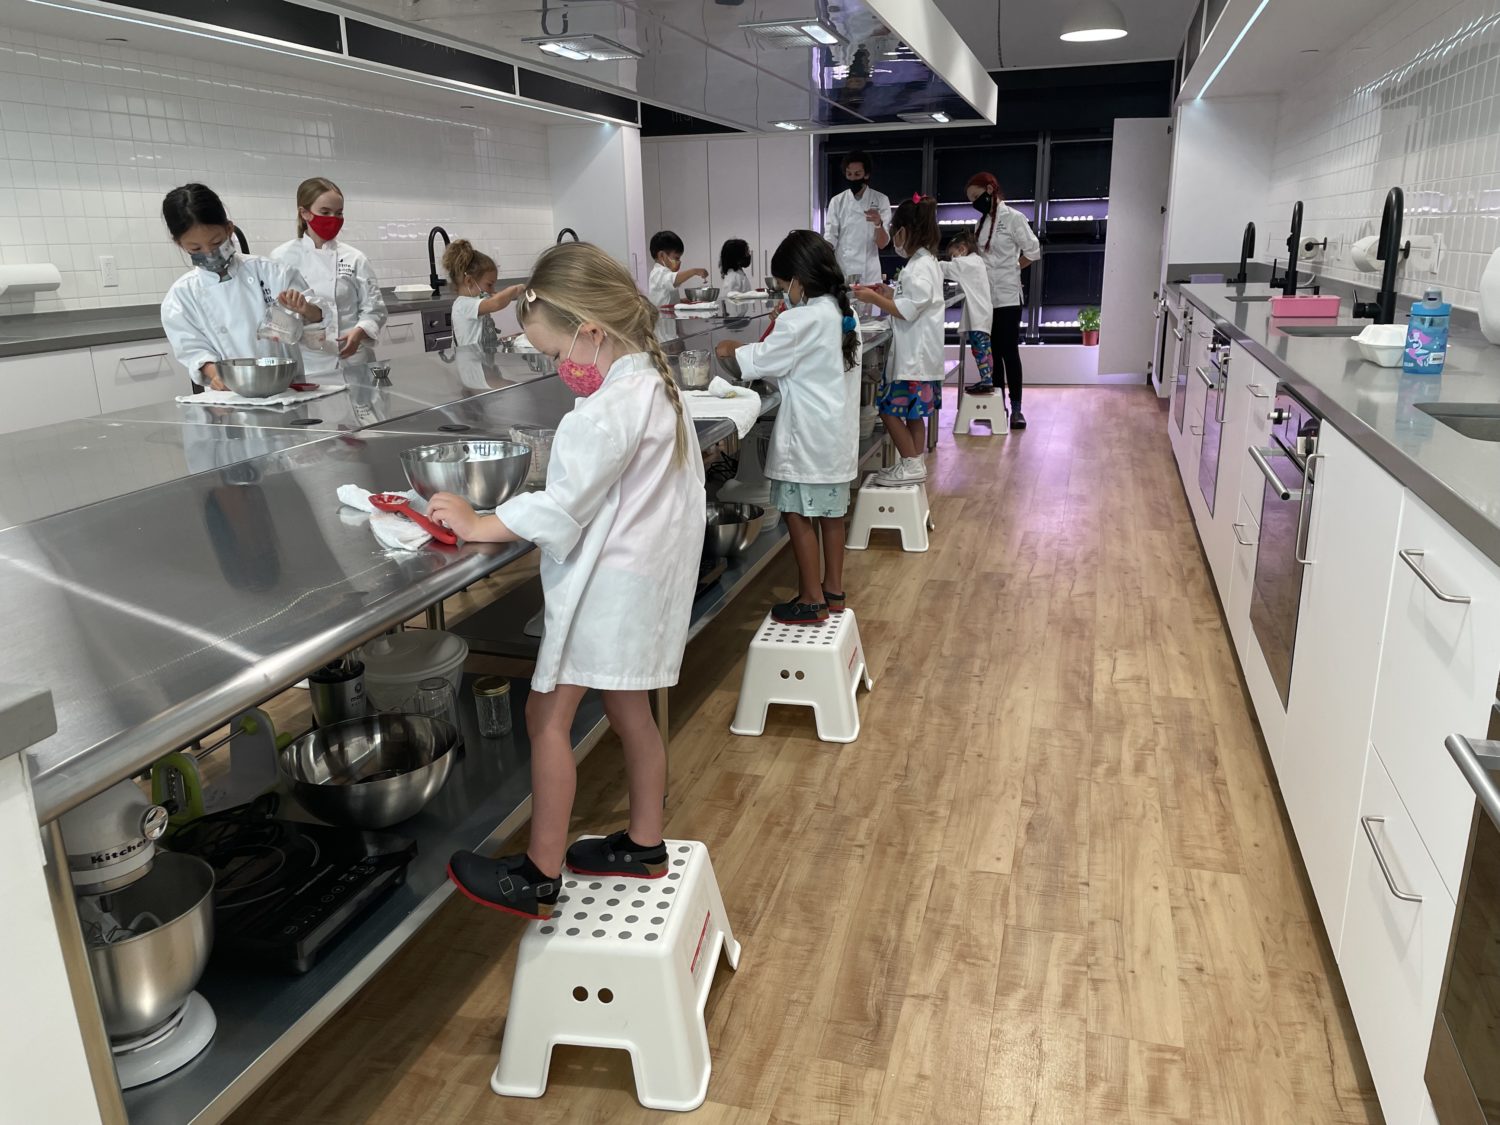 Little Kitchen Academy Franchise UK